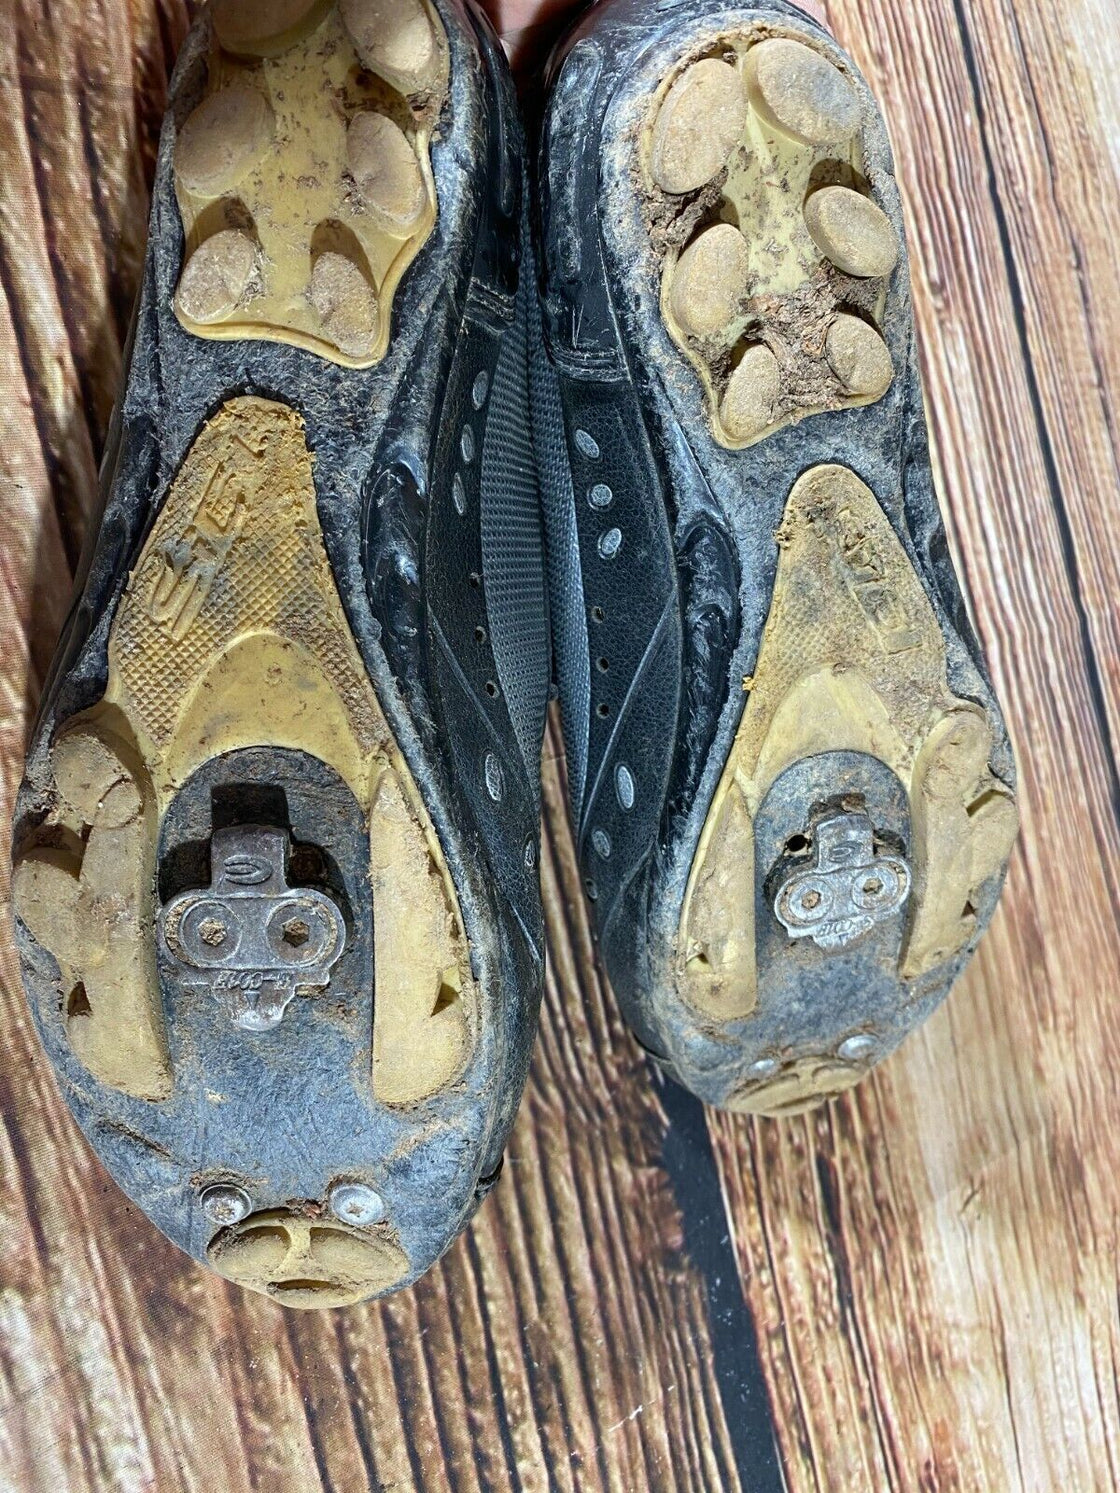 SIDI Vintage Cycling MTB Shoes Mountain Biking Boots Size EU 42 with SPD Cleats